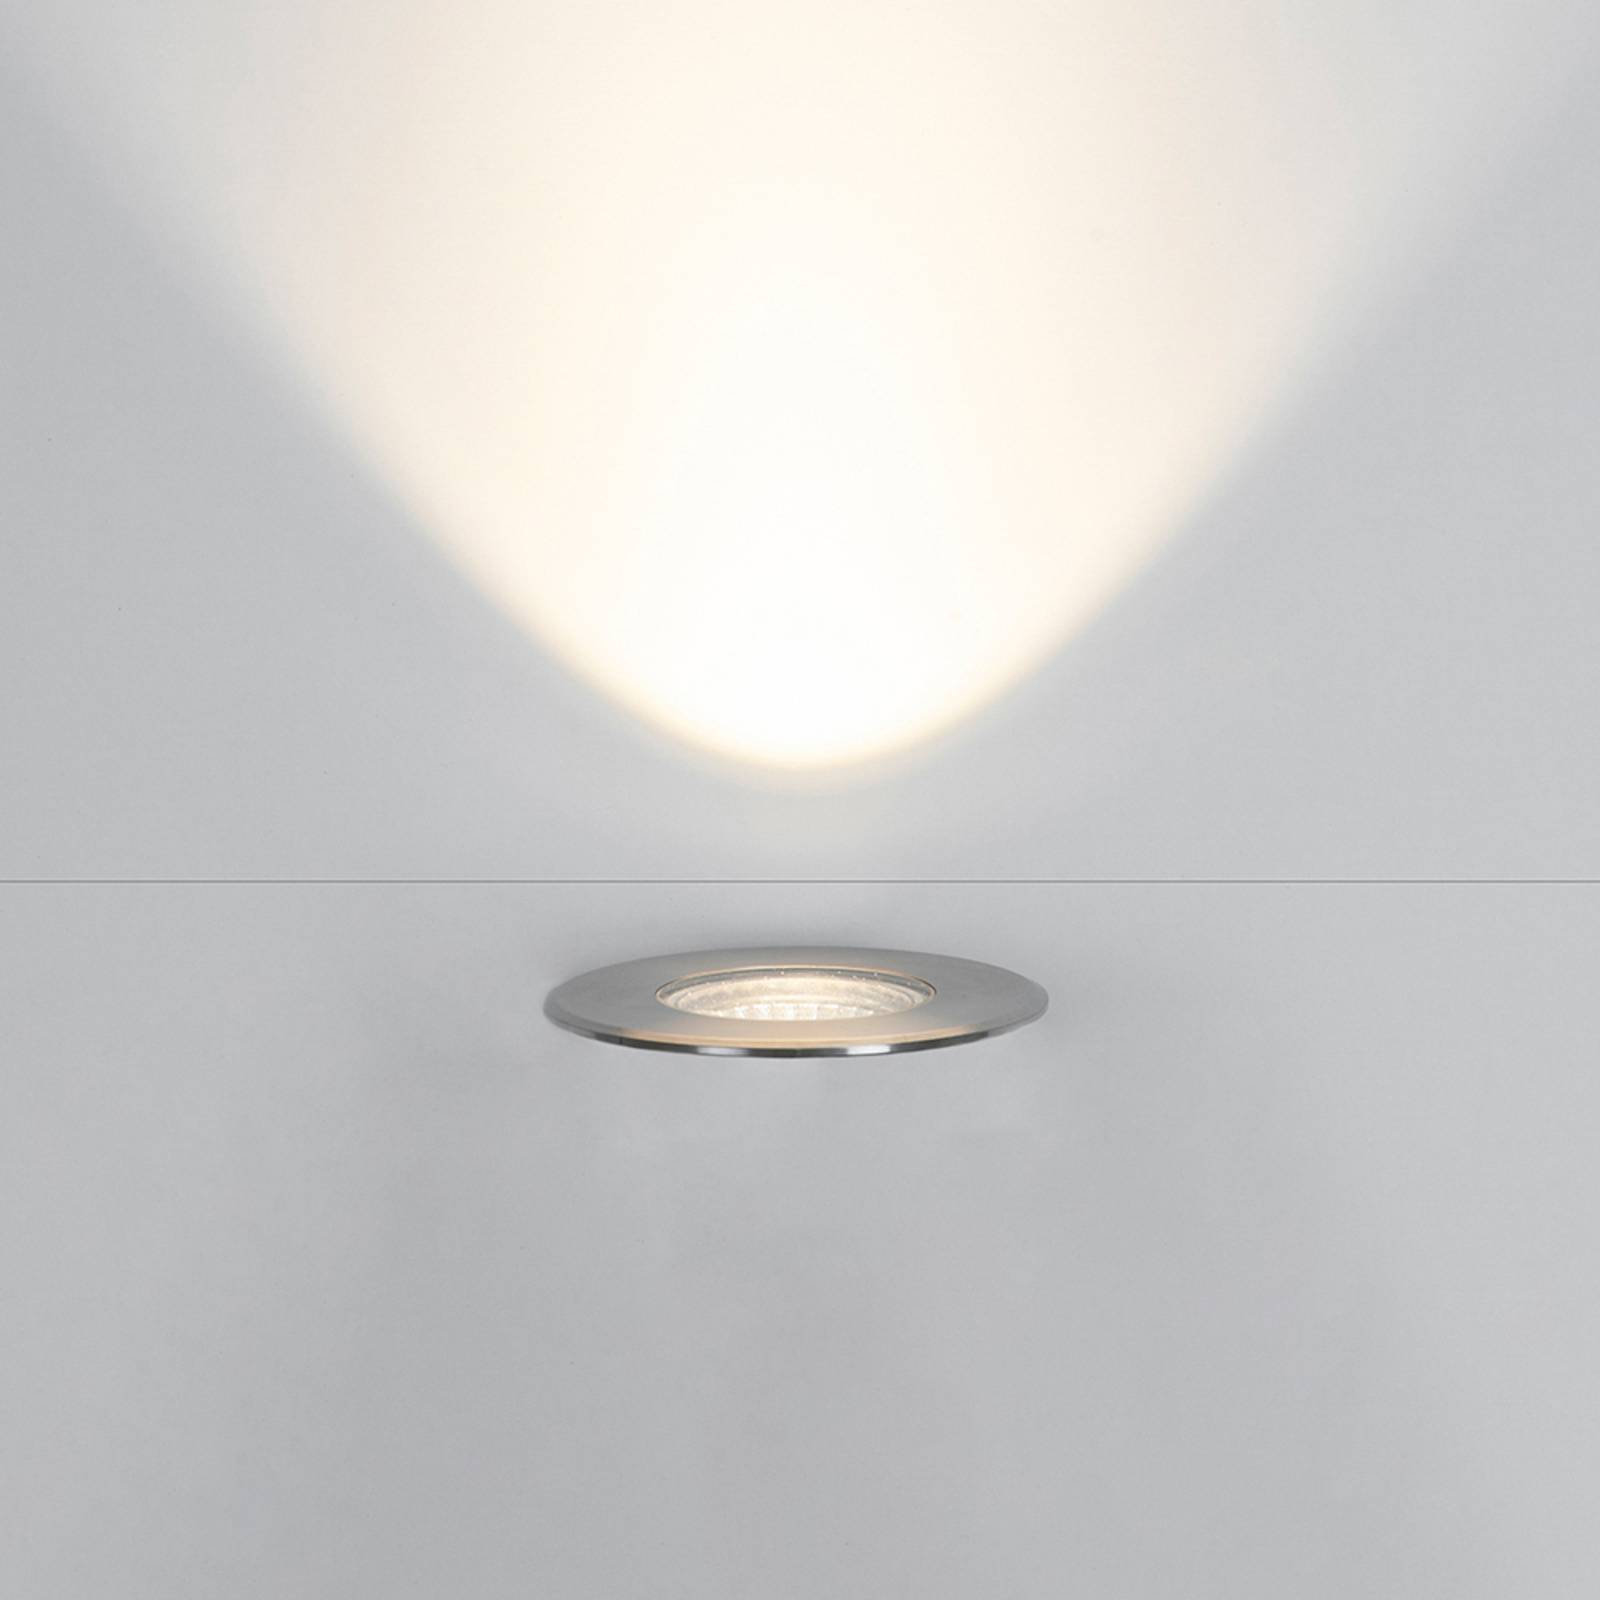 BRUMBERG Boled LED indbygningslampe, Ø 11 cm, 12 W